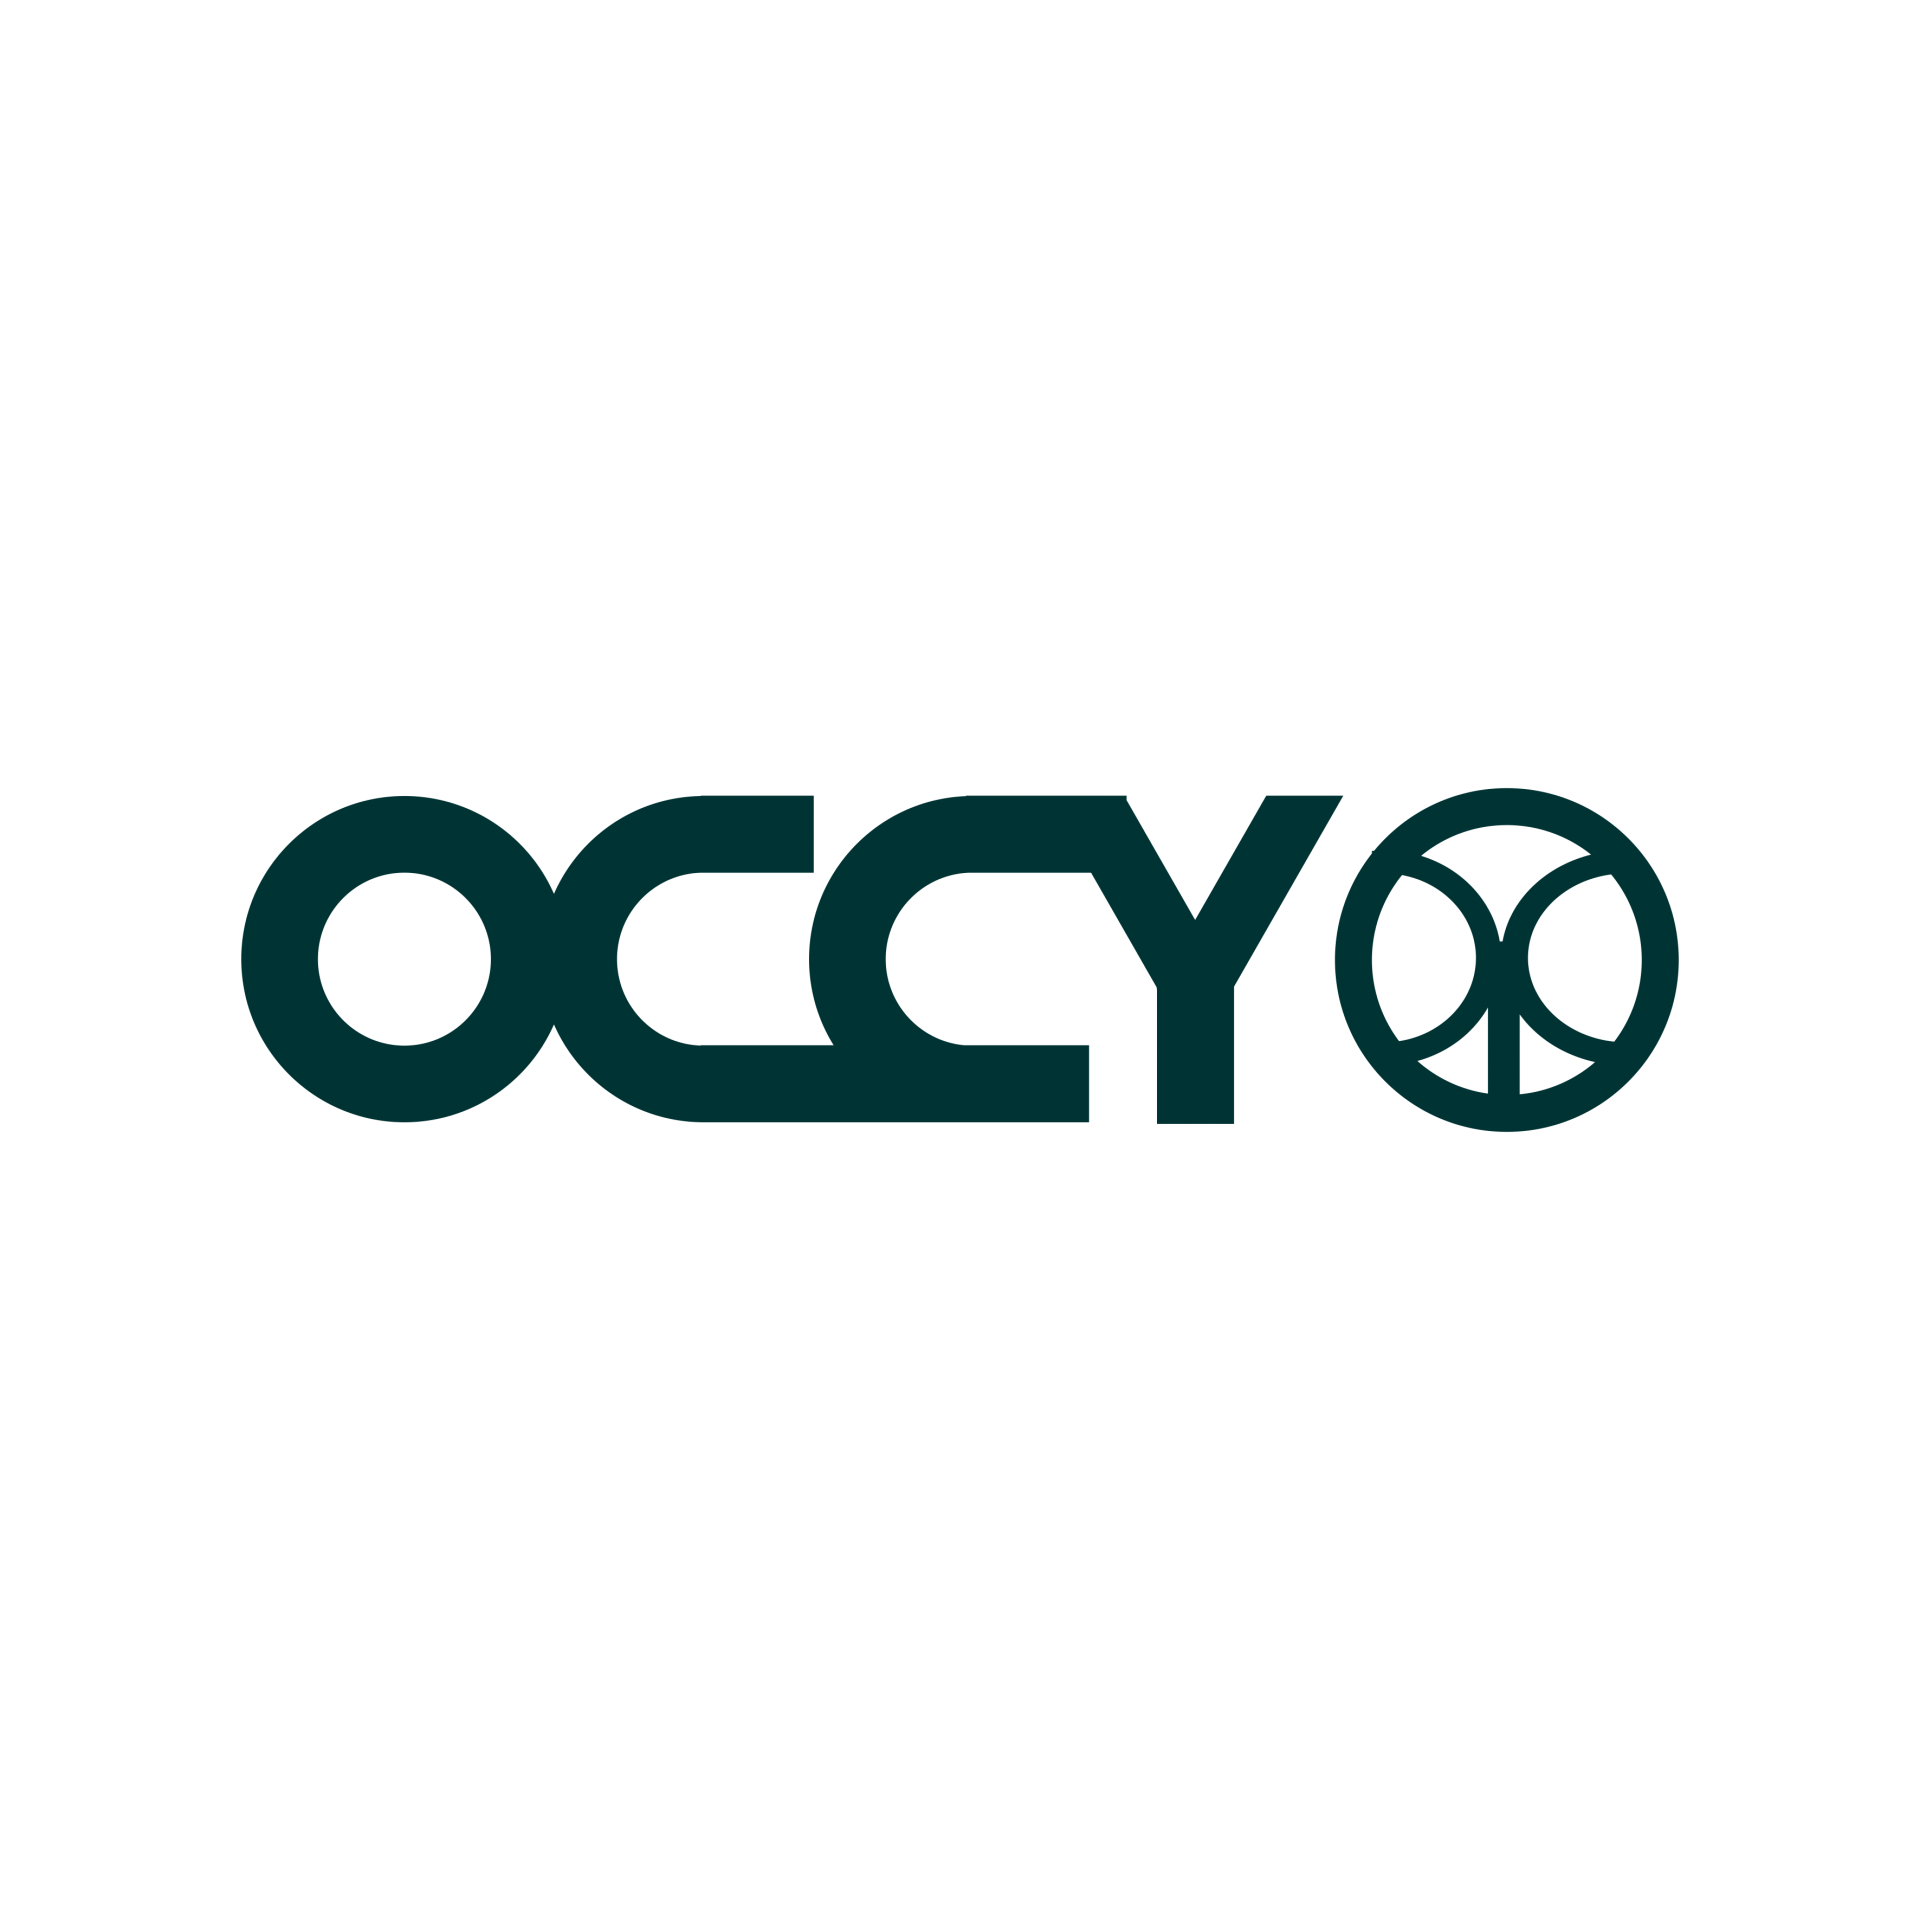 occy : Brand Short Description Type Here.